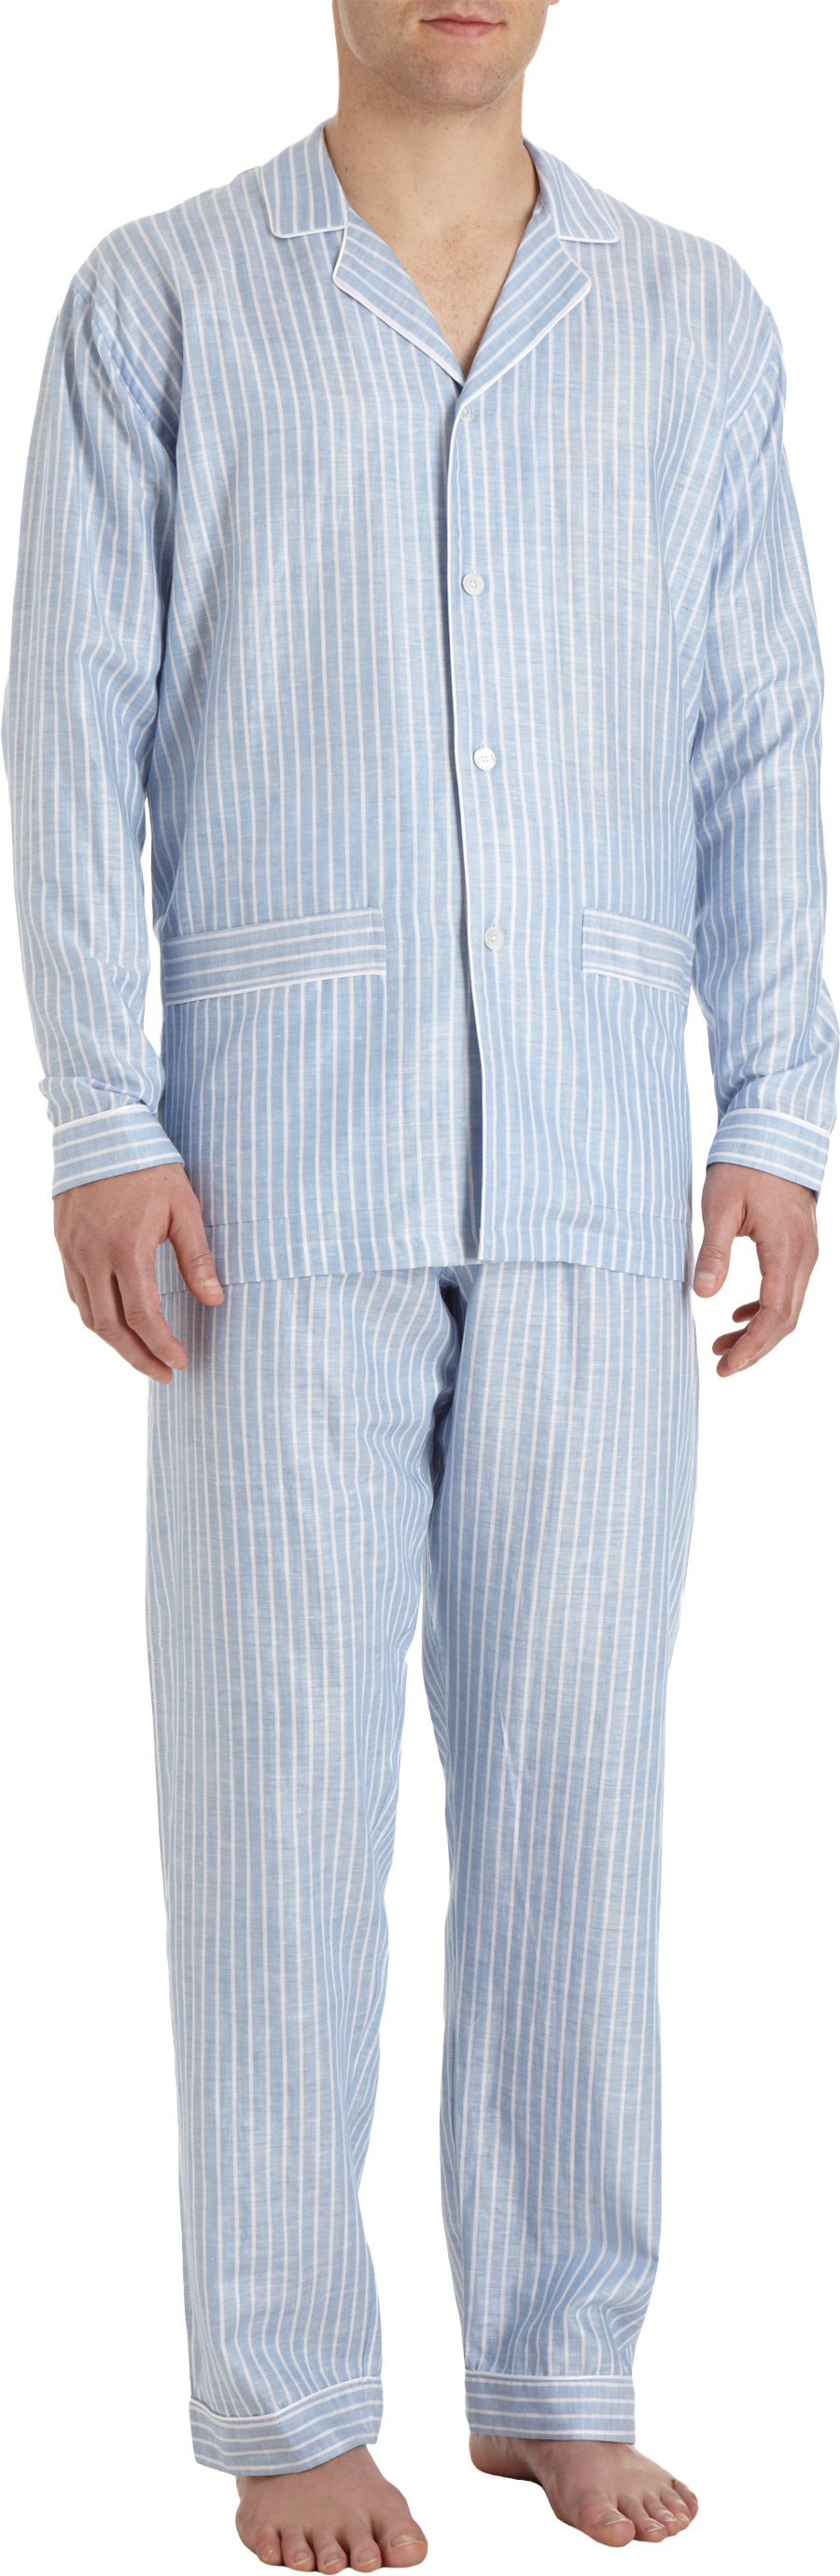 Lyst - Zimmerli Stripe Pajama Set in Blue for Men